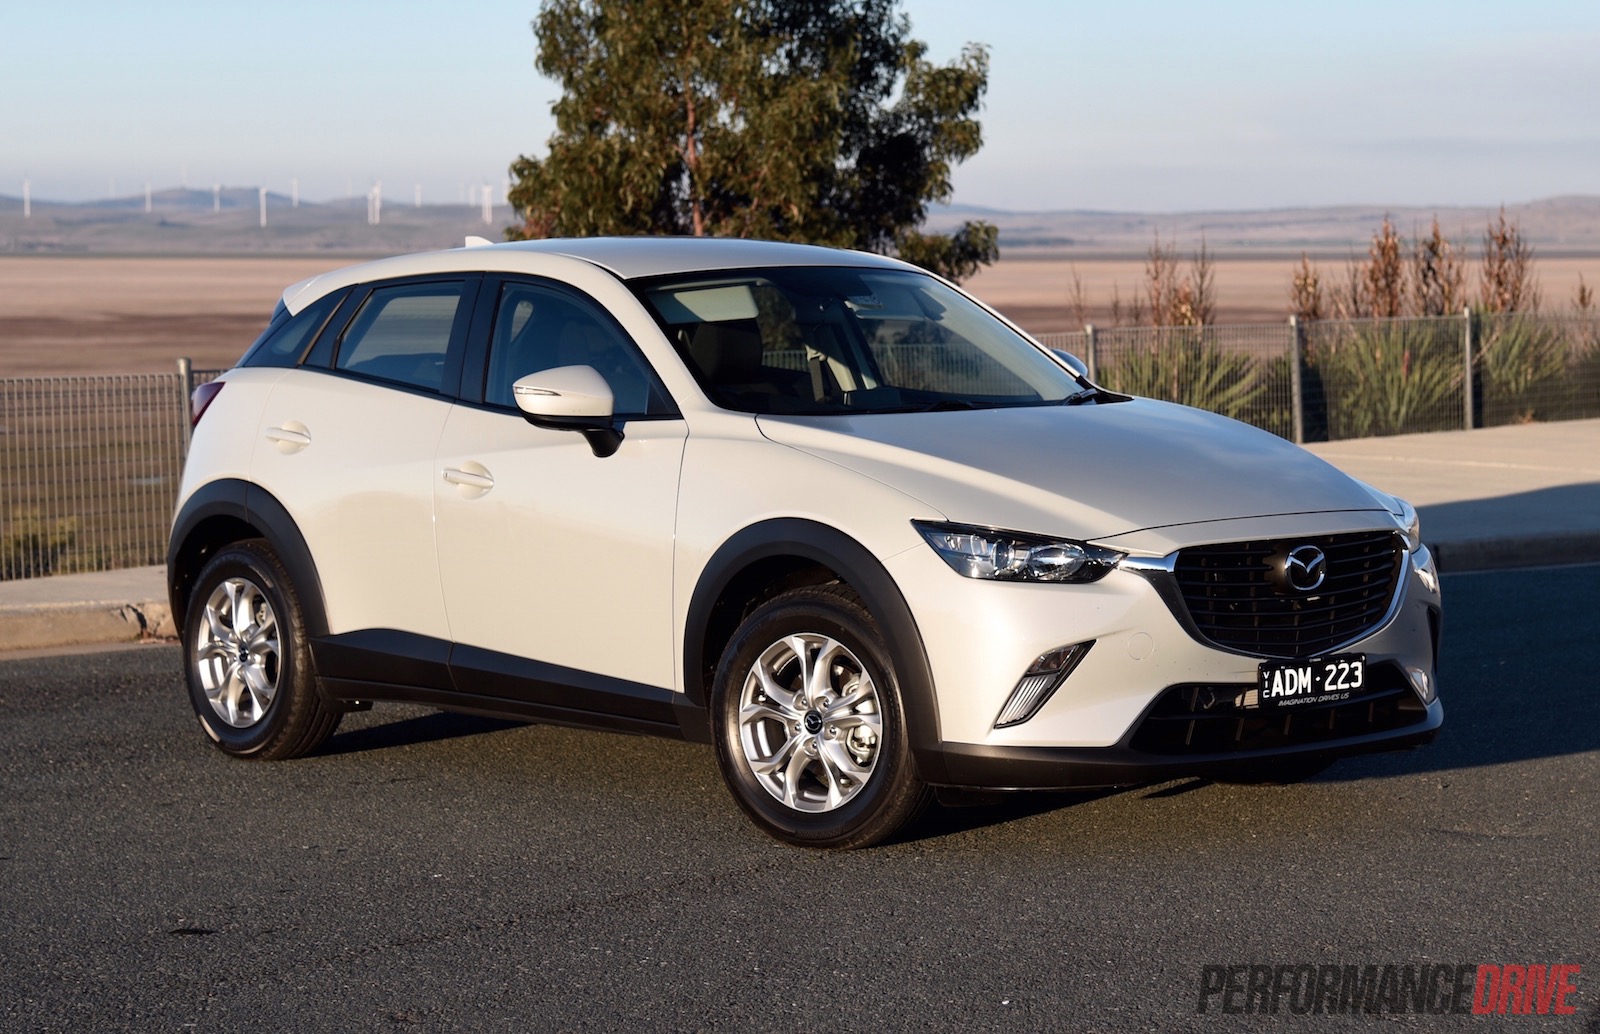 2015 Mazda CX-3 Maxx 1.5 diesel review (video)